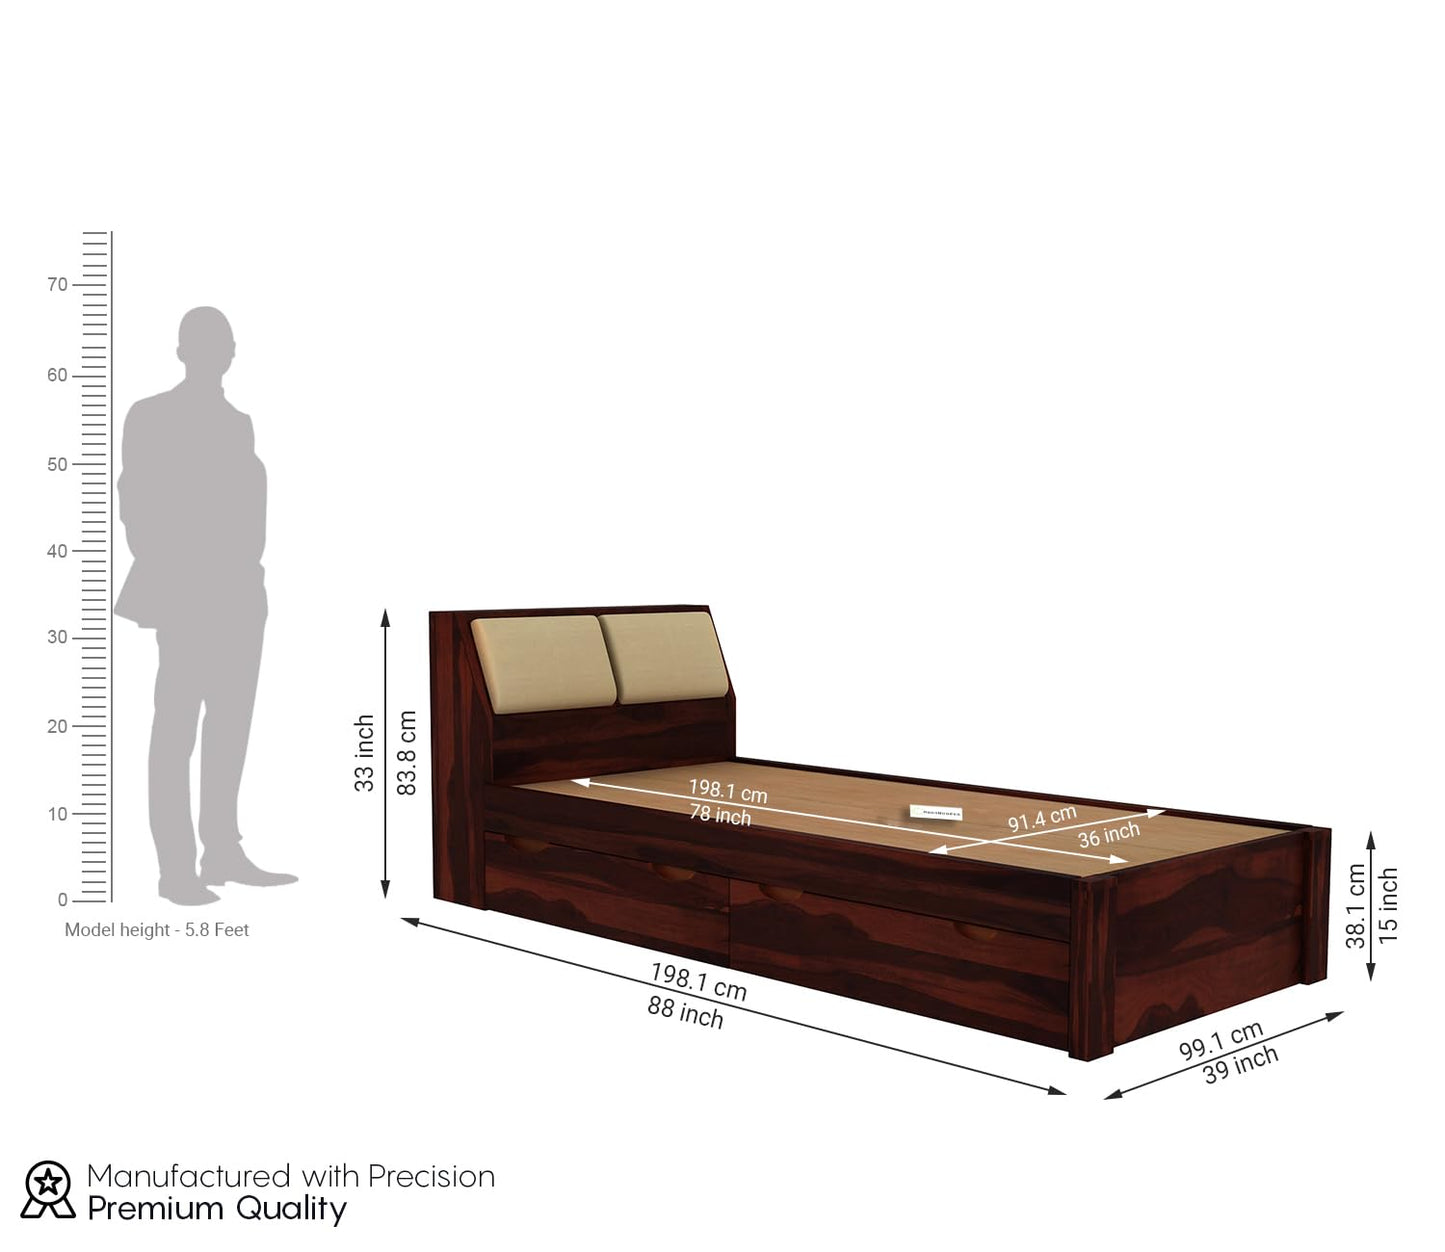 MoonWooden Solid Sheesham Wood Single Bed with Drawer Storage - Elegant and Functional Bedroom Furniture (Walnut Finish)